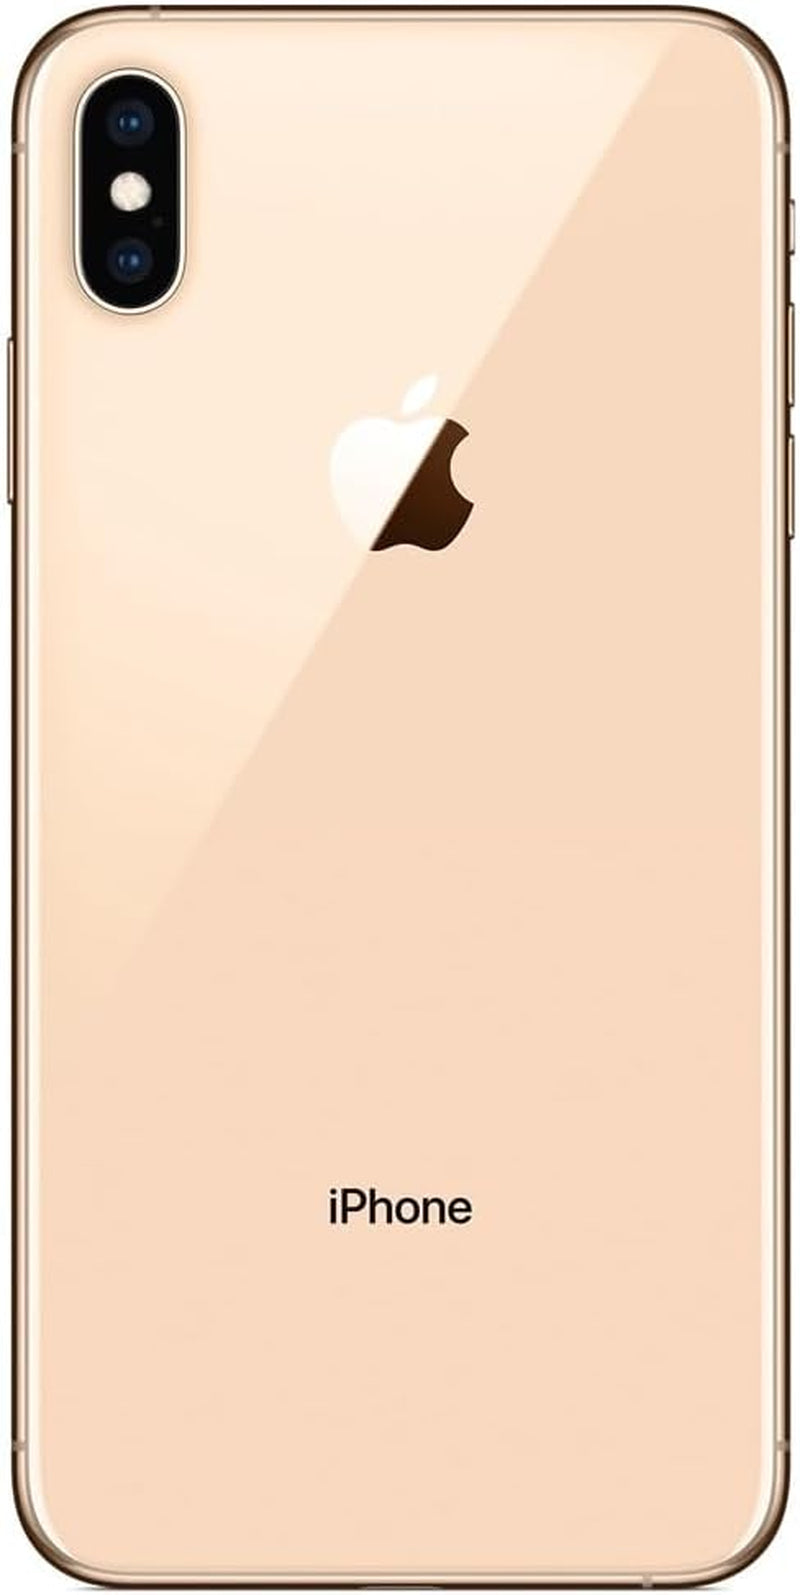 Iphone XS Max, US Version, 64GB, Gold - Unlocked (Renewed) - Growing Apex Tech